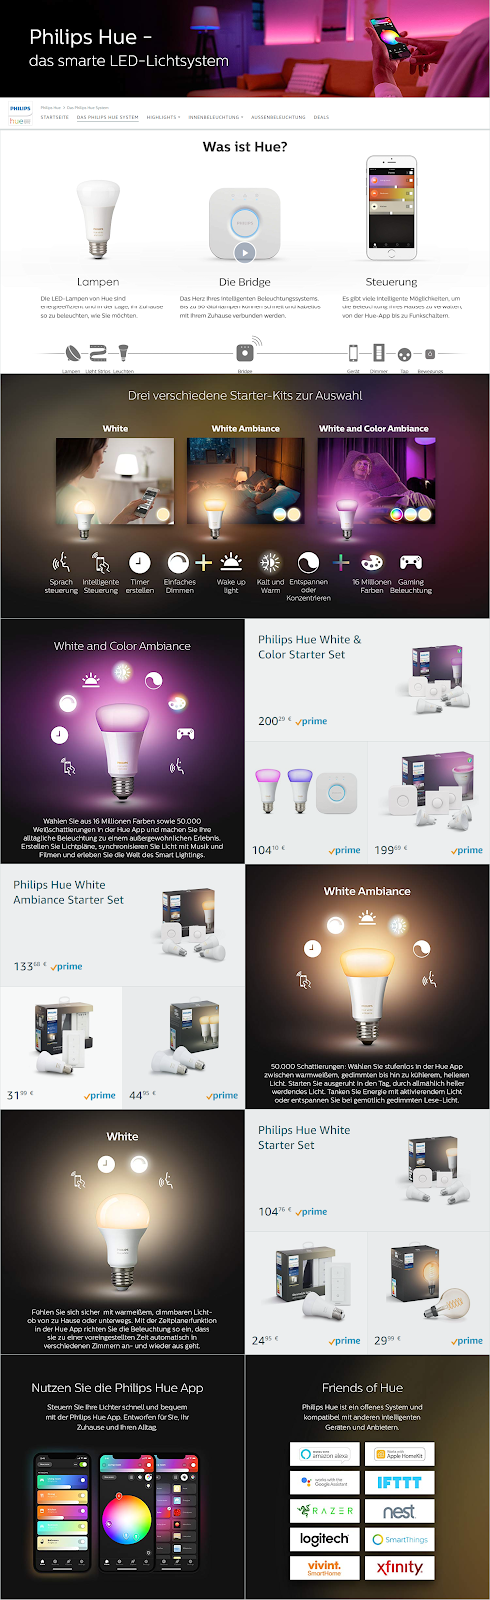 Screenshot Philips Hue Produktpräsentation auf Amazon